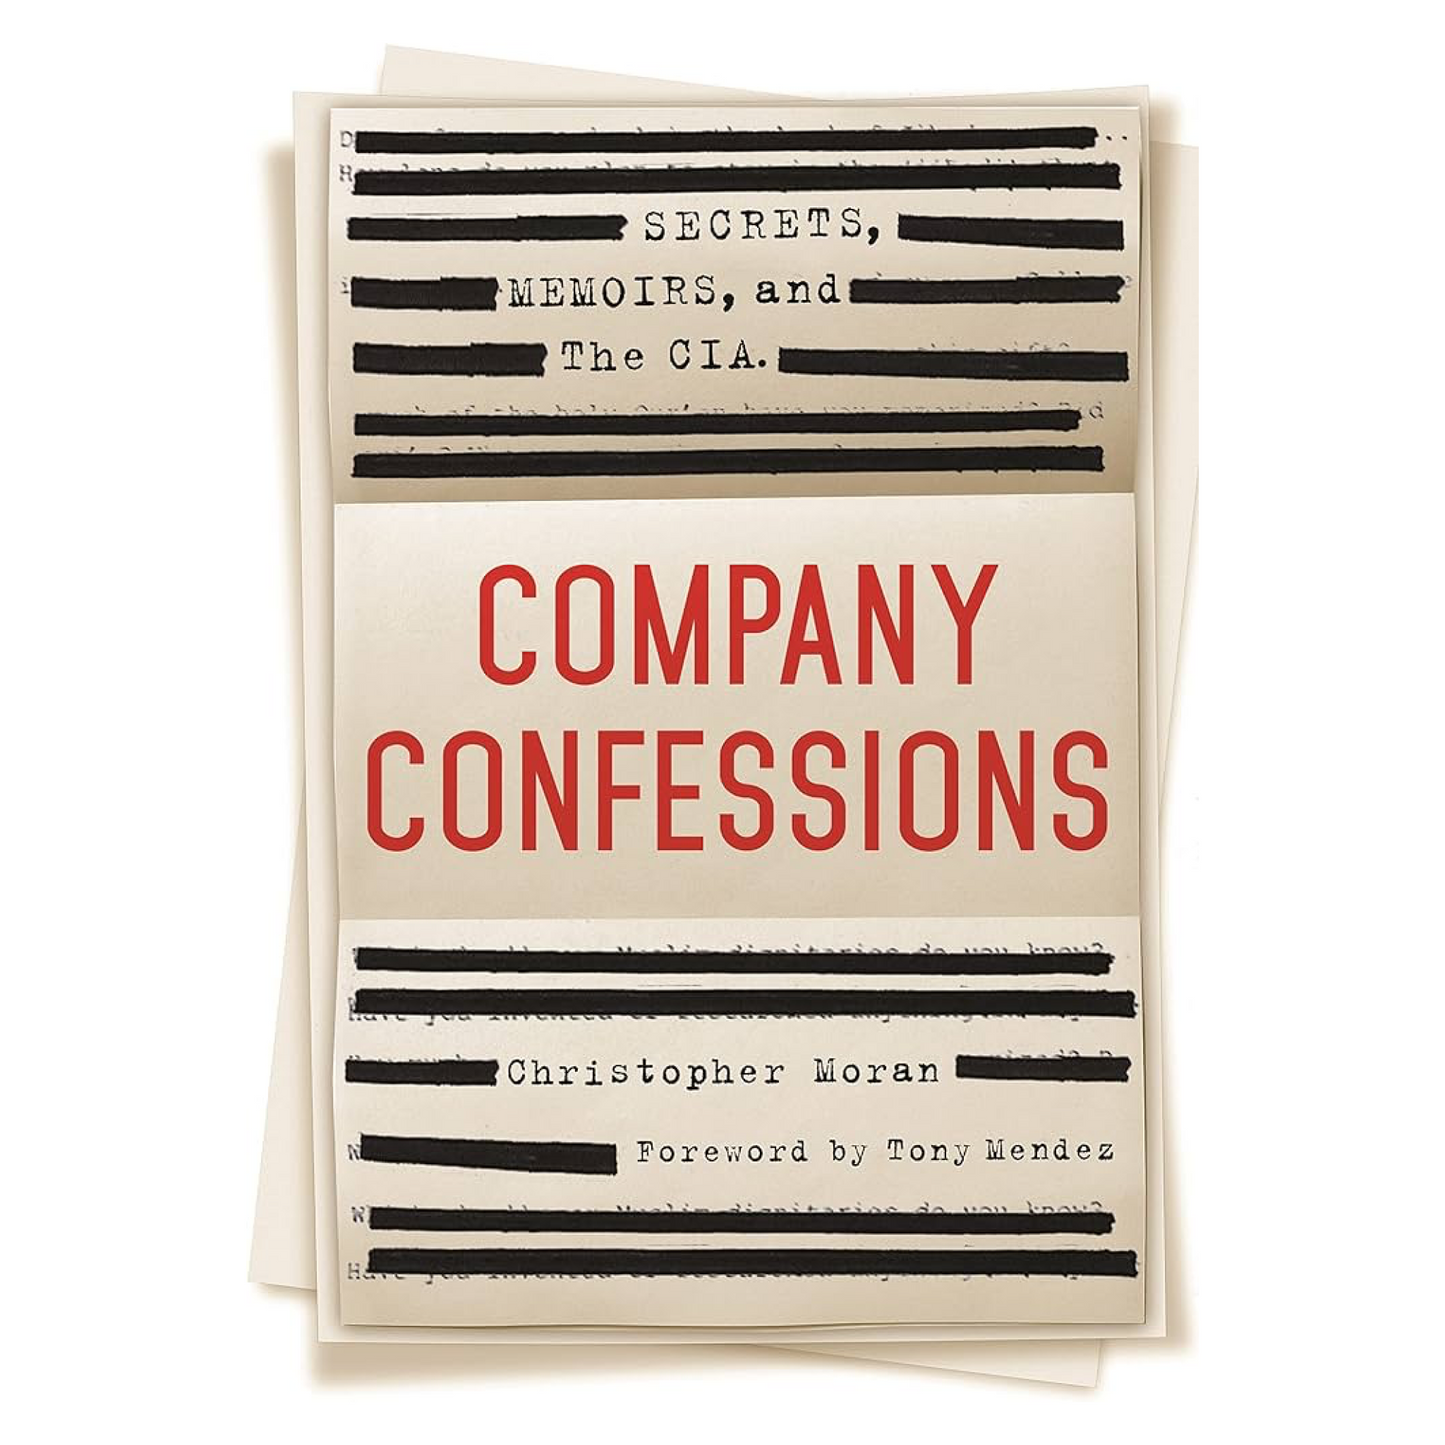 Company Confessions